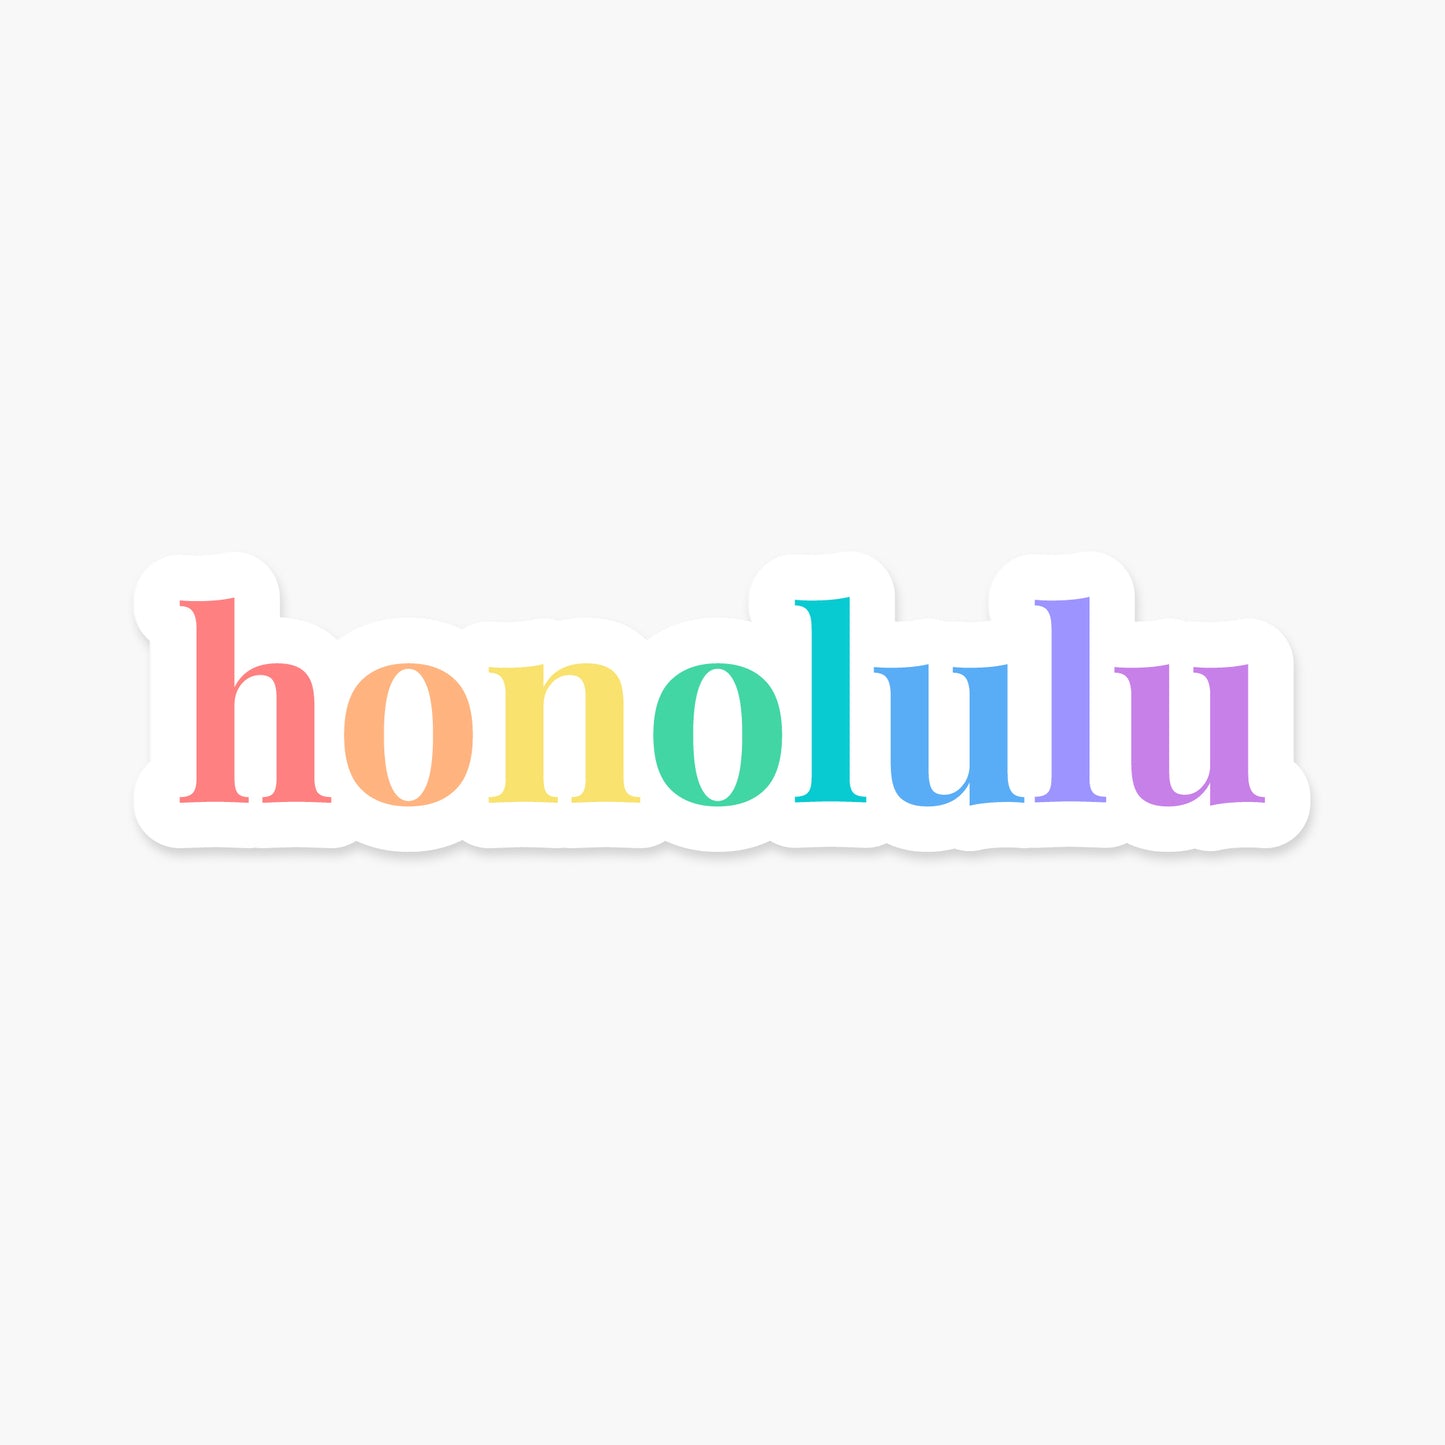 Honolulu, Oahu, Hawaii - Everyday Sticker | Footnotes Paper